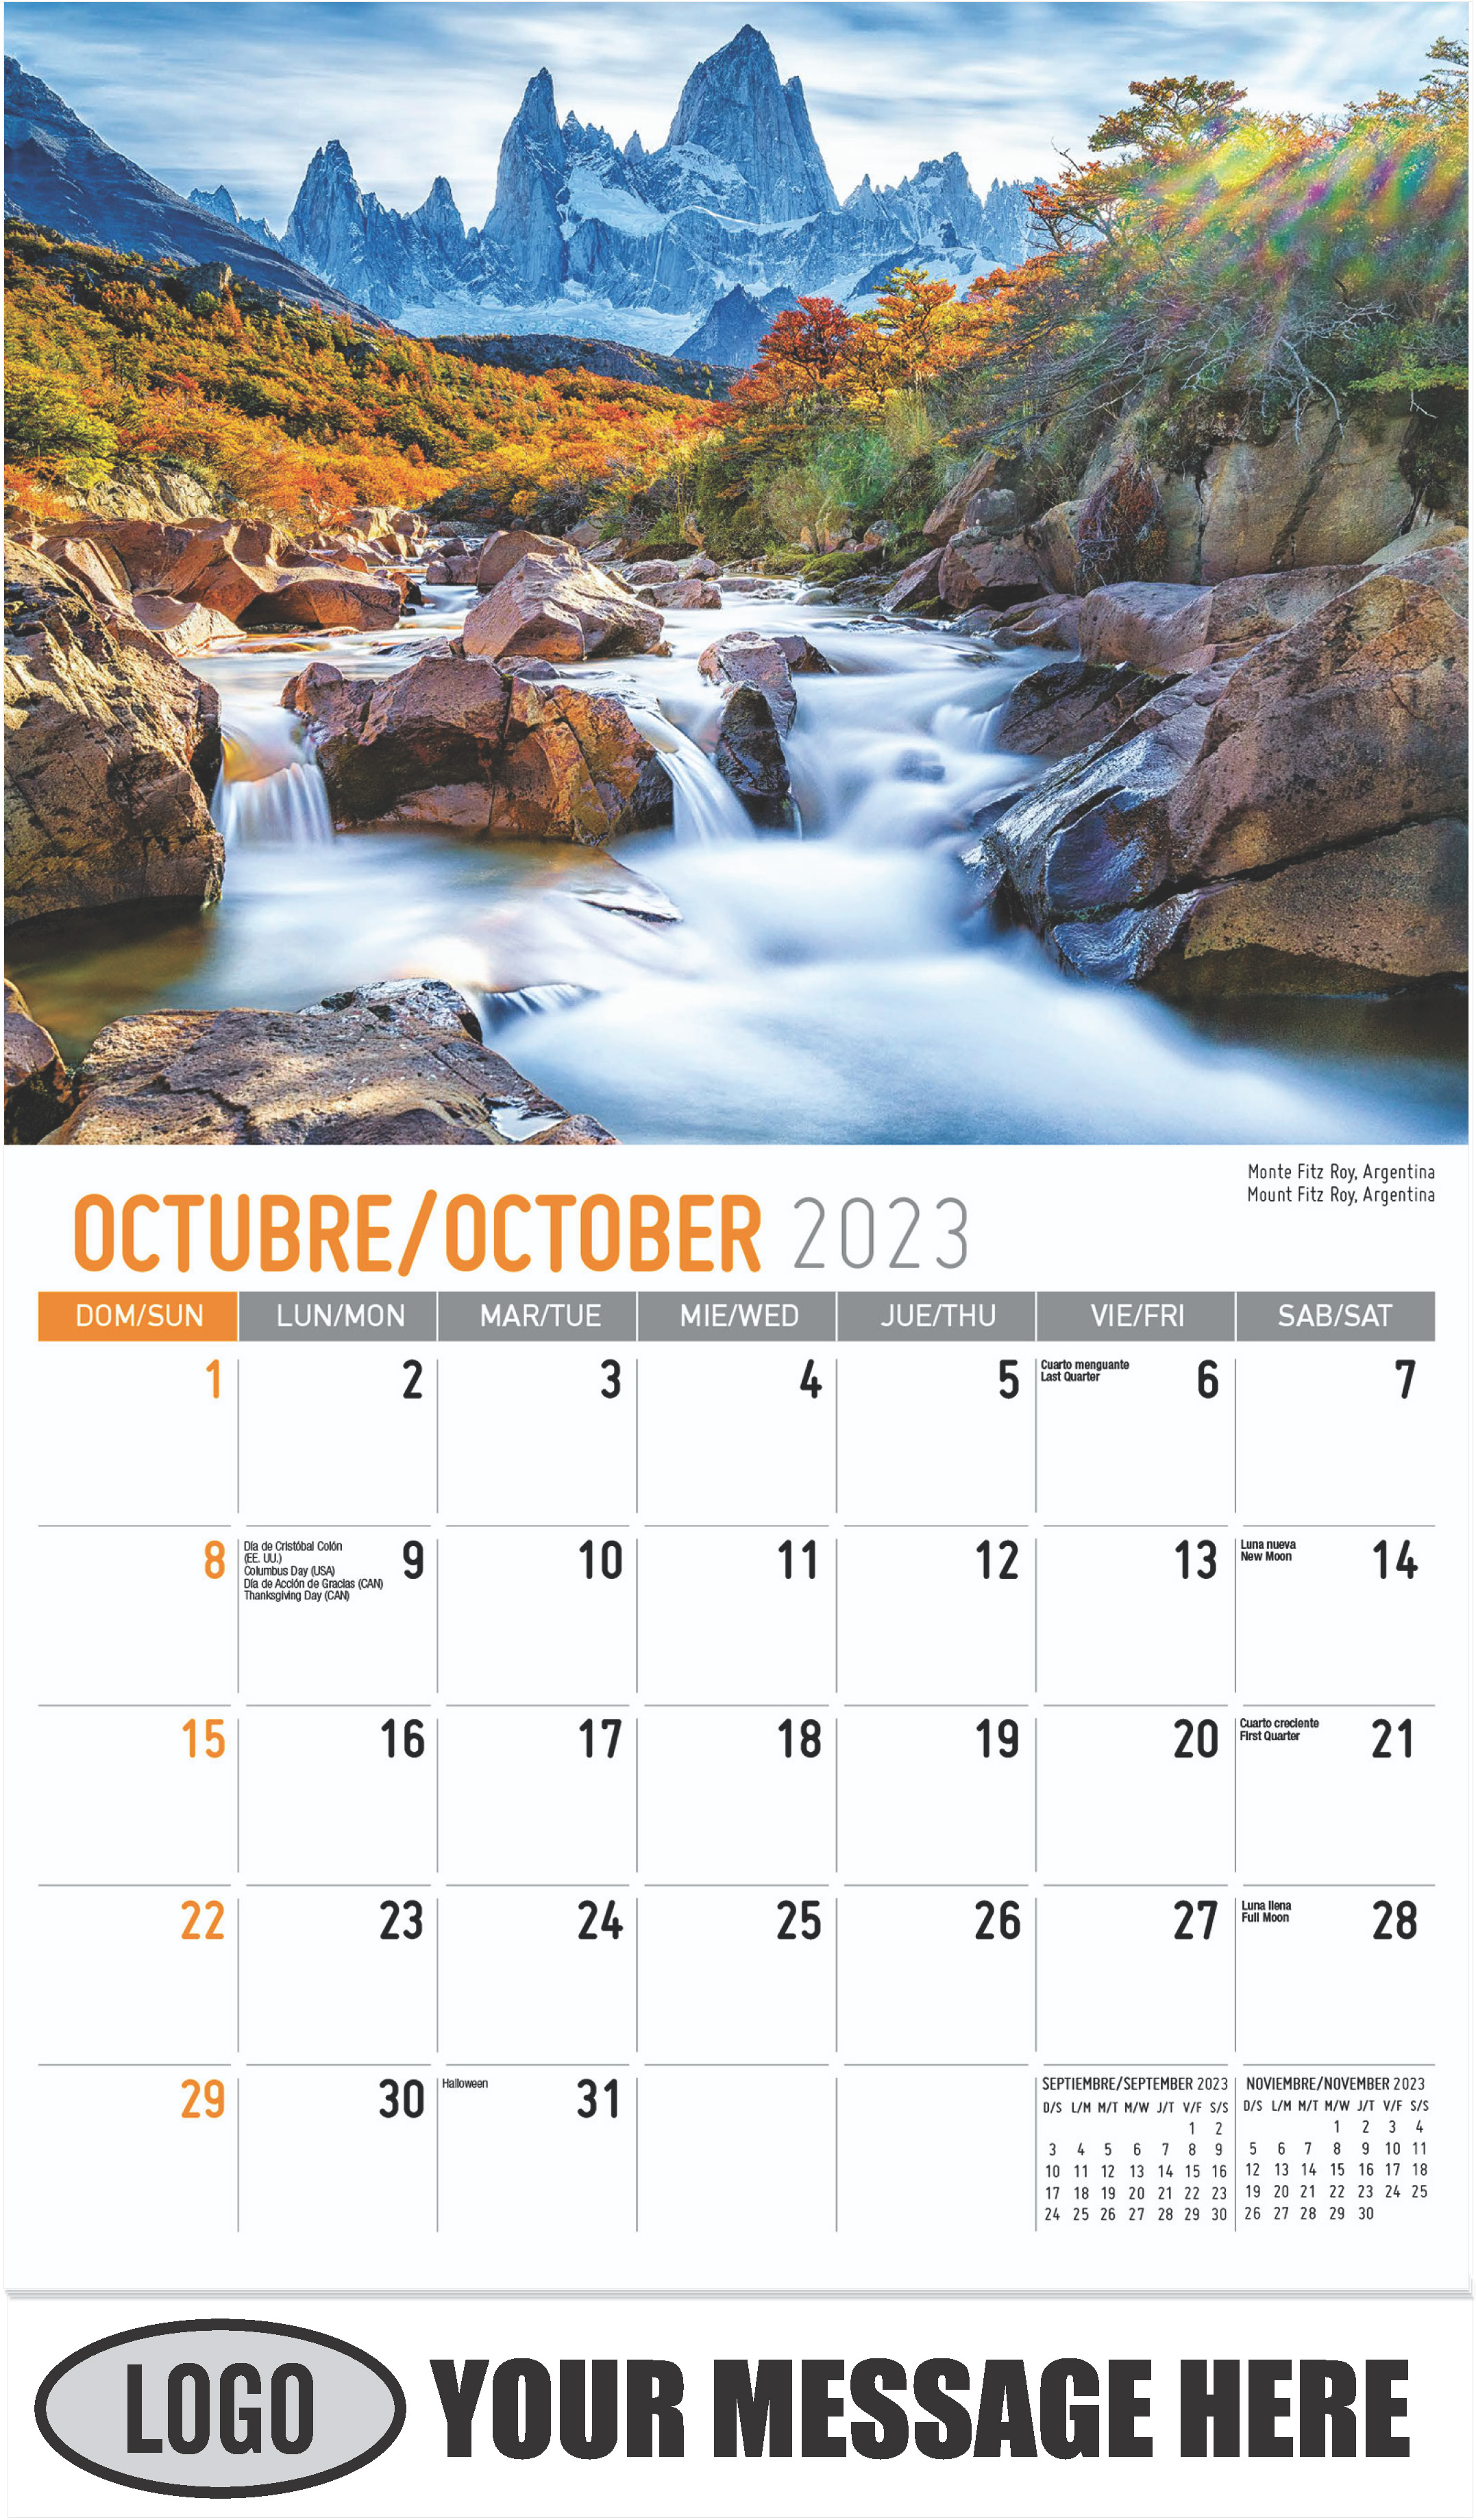 Mount Fitz Roy, Argentina - October - Beauty of Latin America 2023 Promotional Calendar